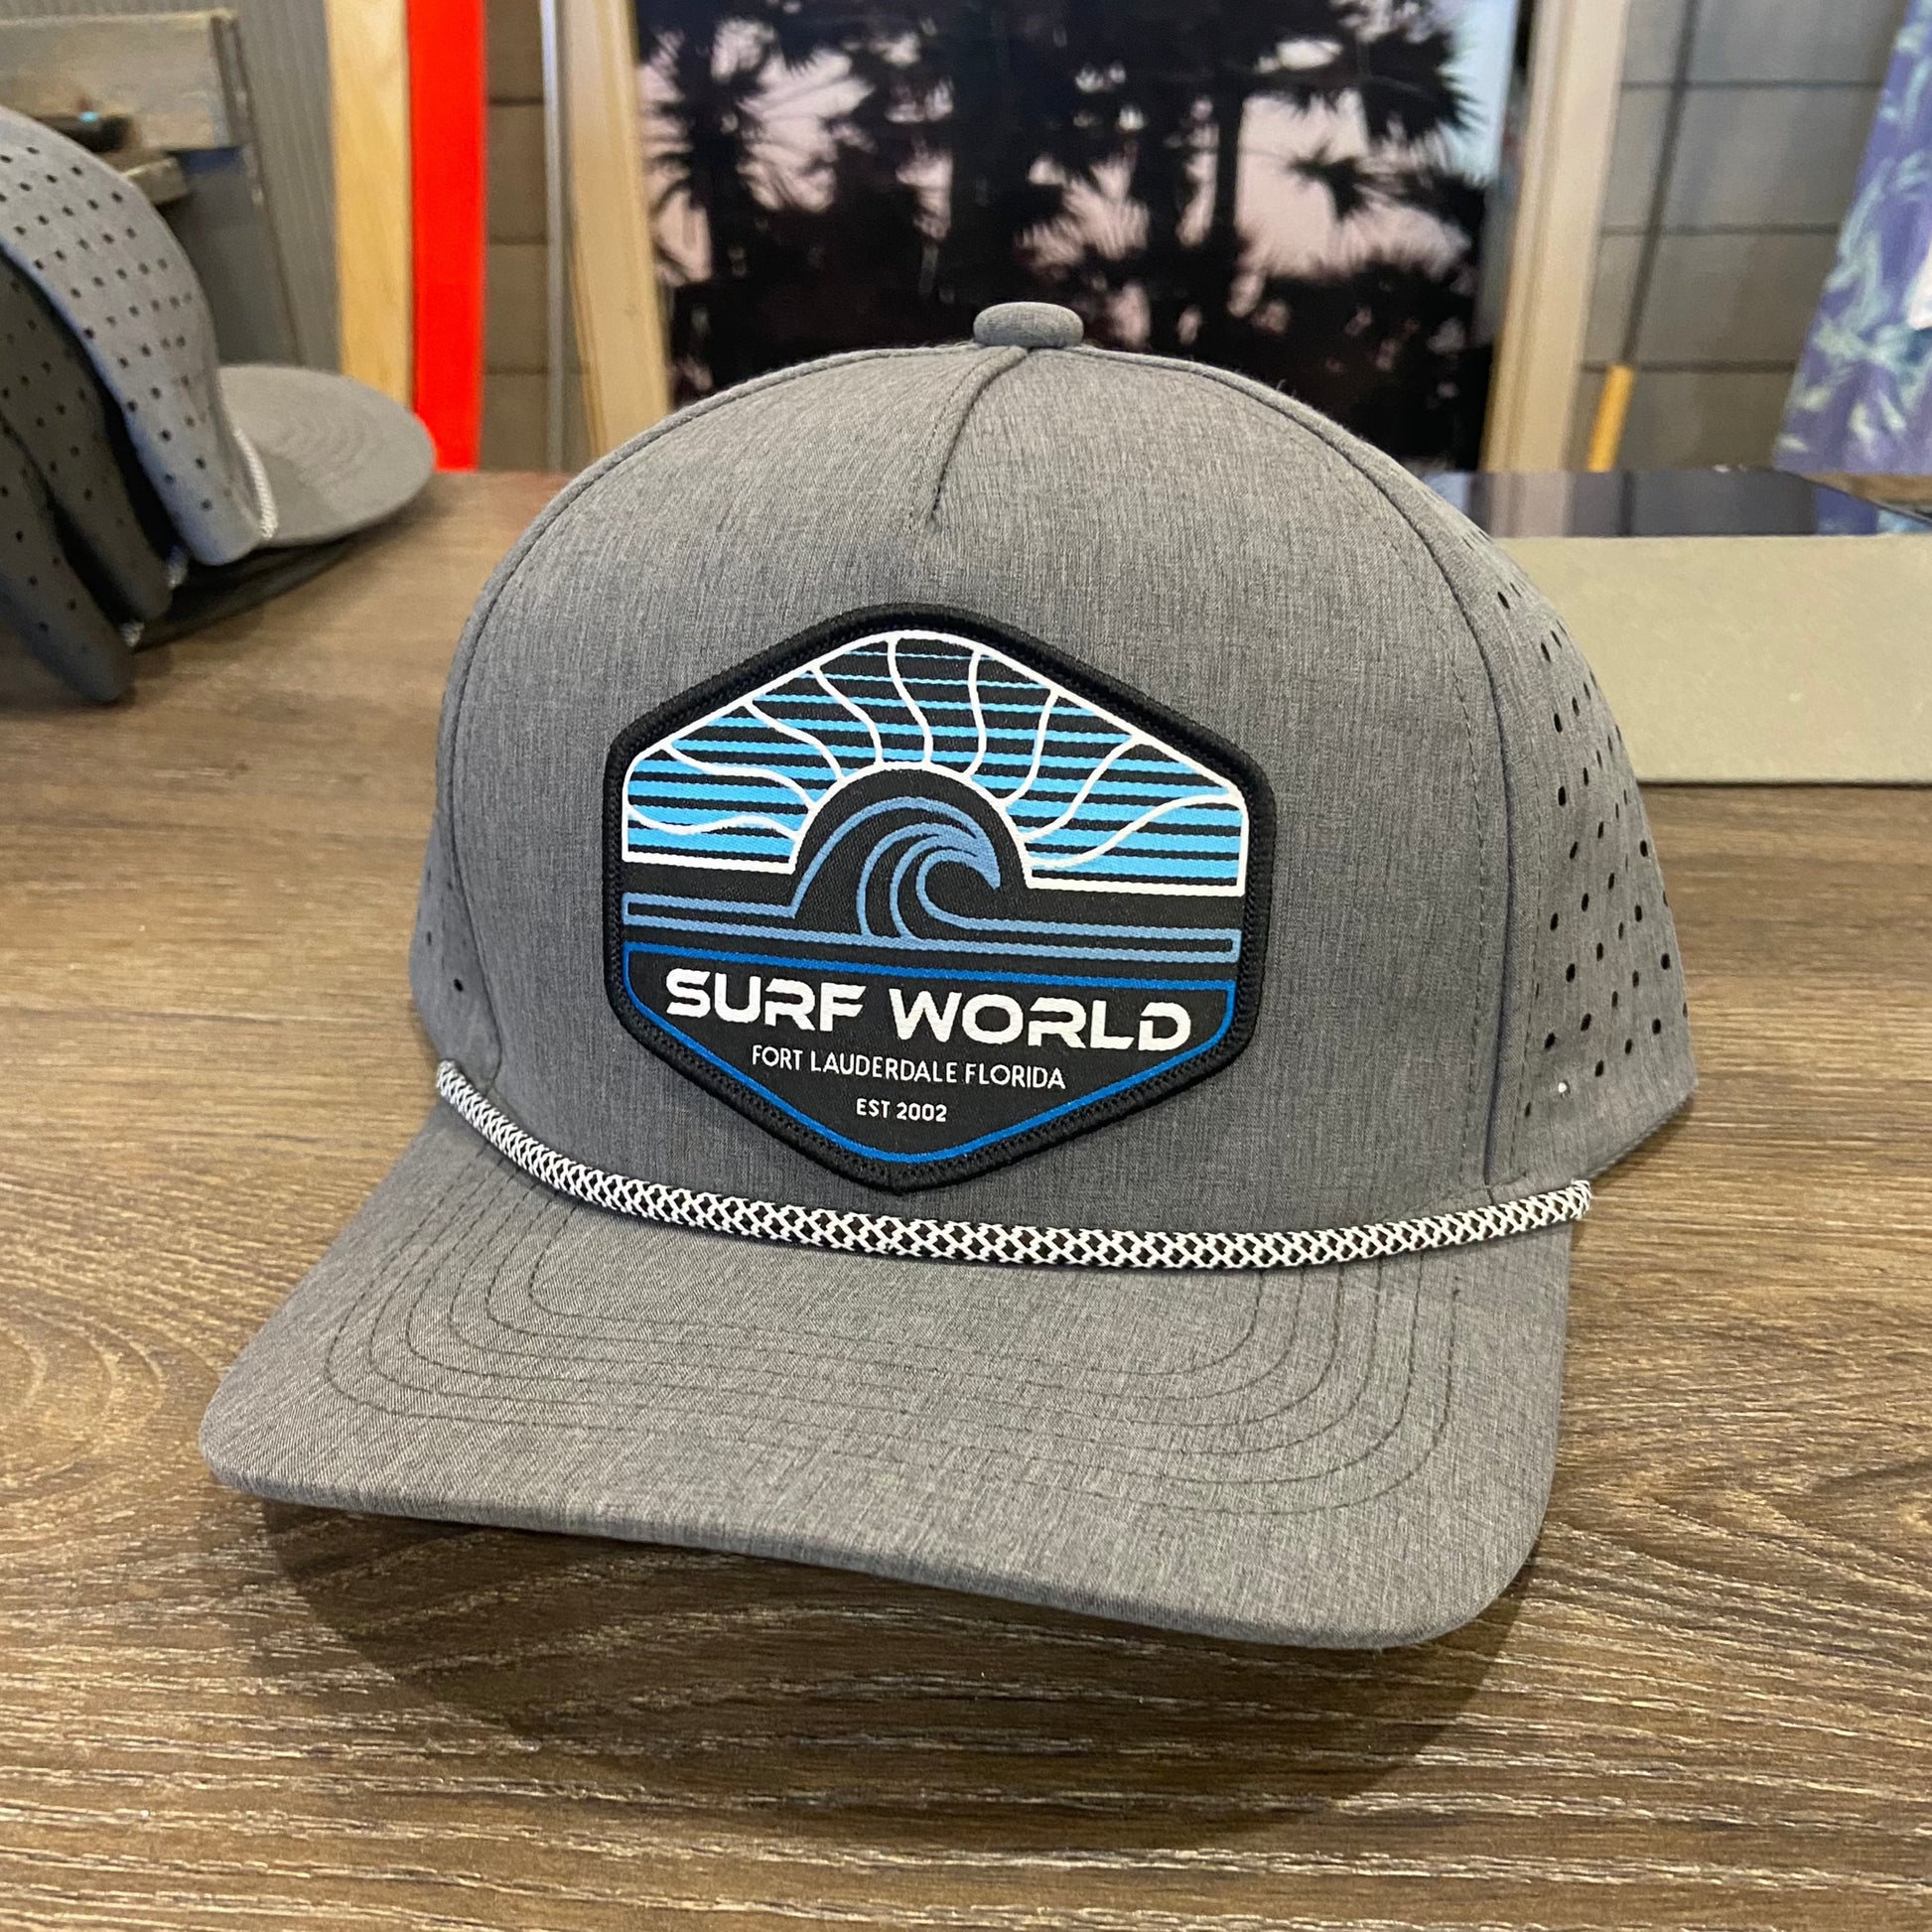 Surf World Performance Snap Back Hat - Black / Grey / White Hats